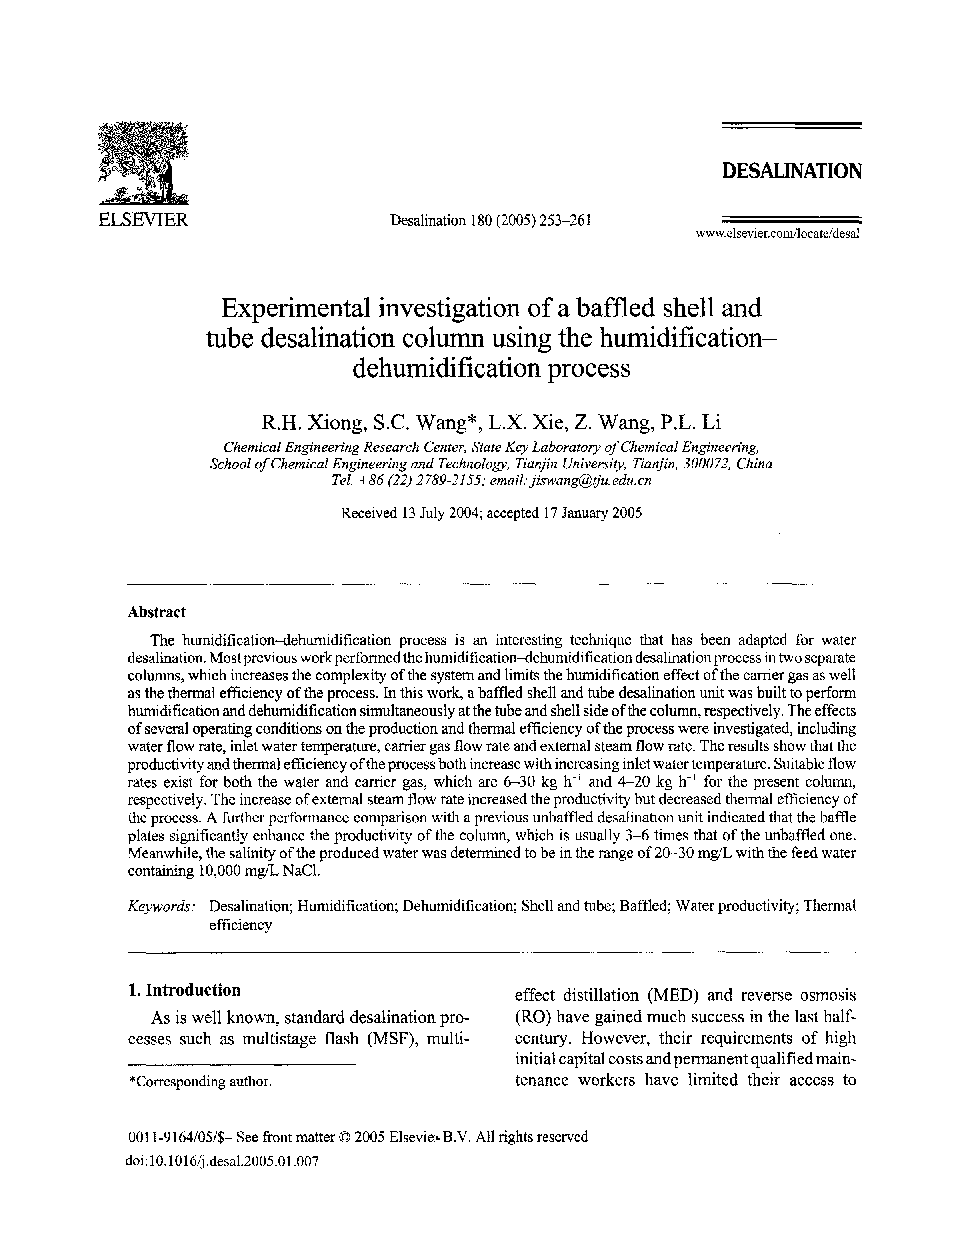 Experimental investigation of a baffled shell and tube desalination column using the humidification-dehumidification process